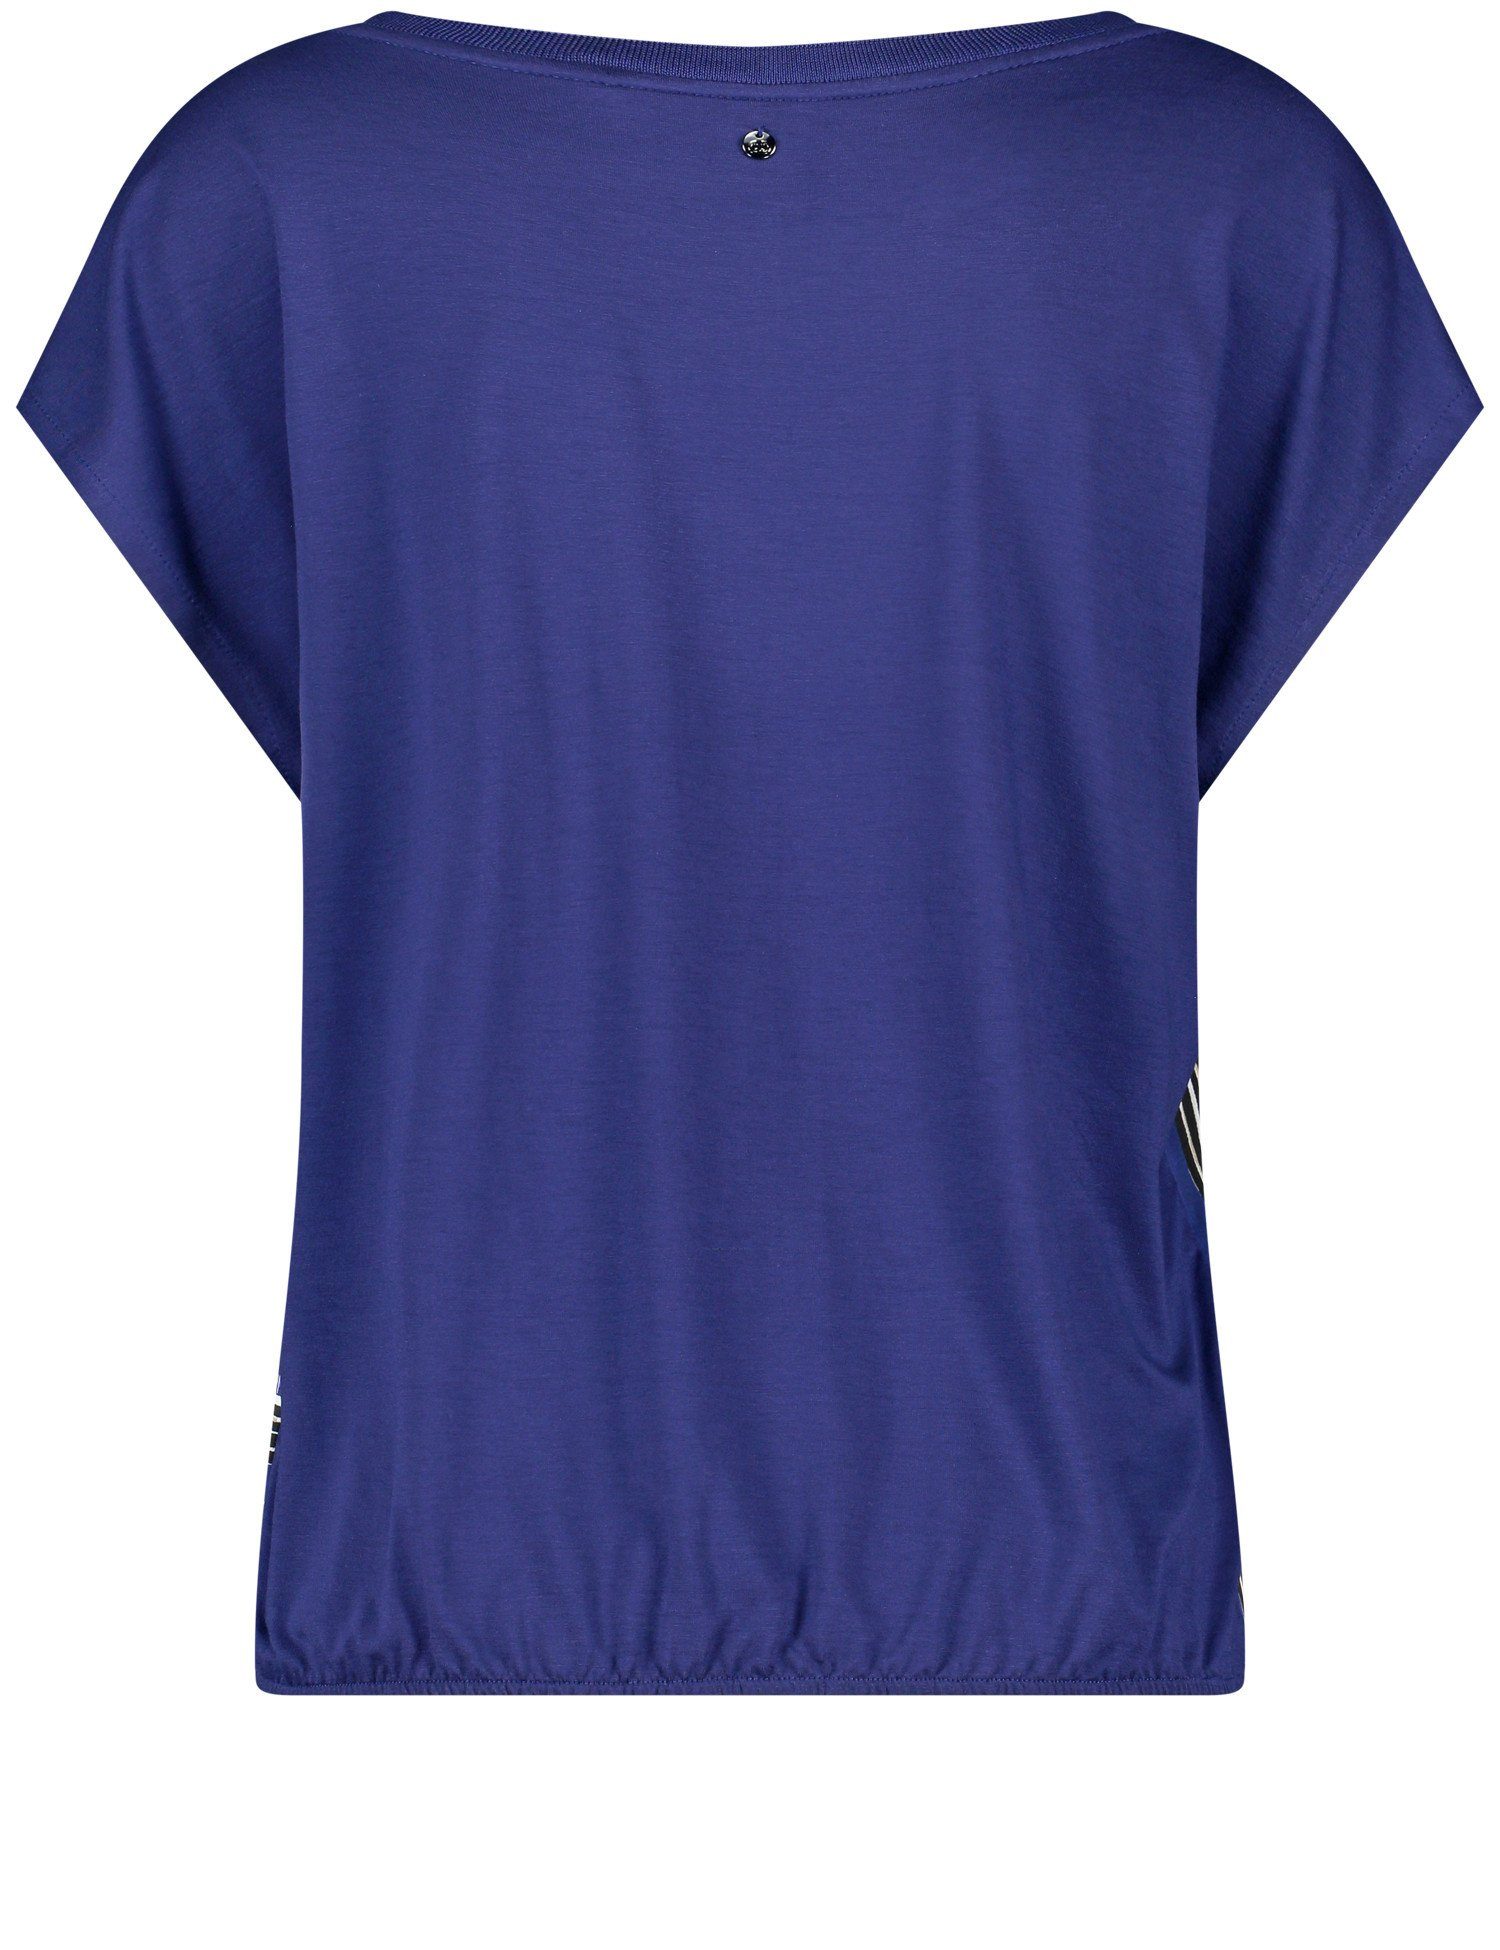 GERRY WEBER Druck Blau/Lila/Pink Blusenshirt Saum elastischem Kurzarmshirt mit